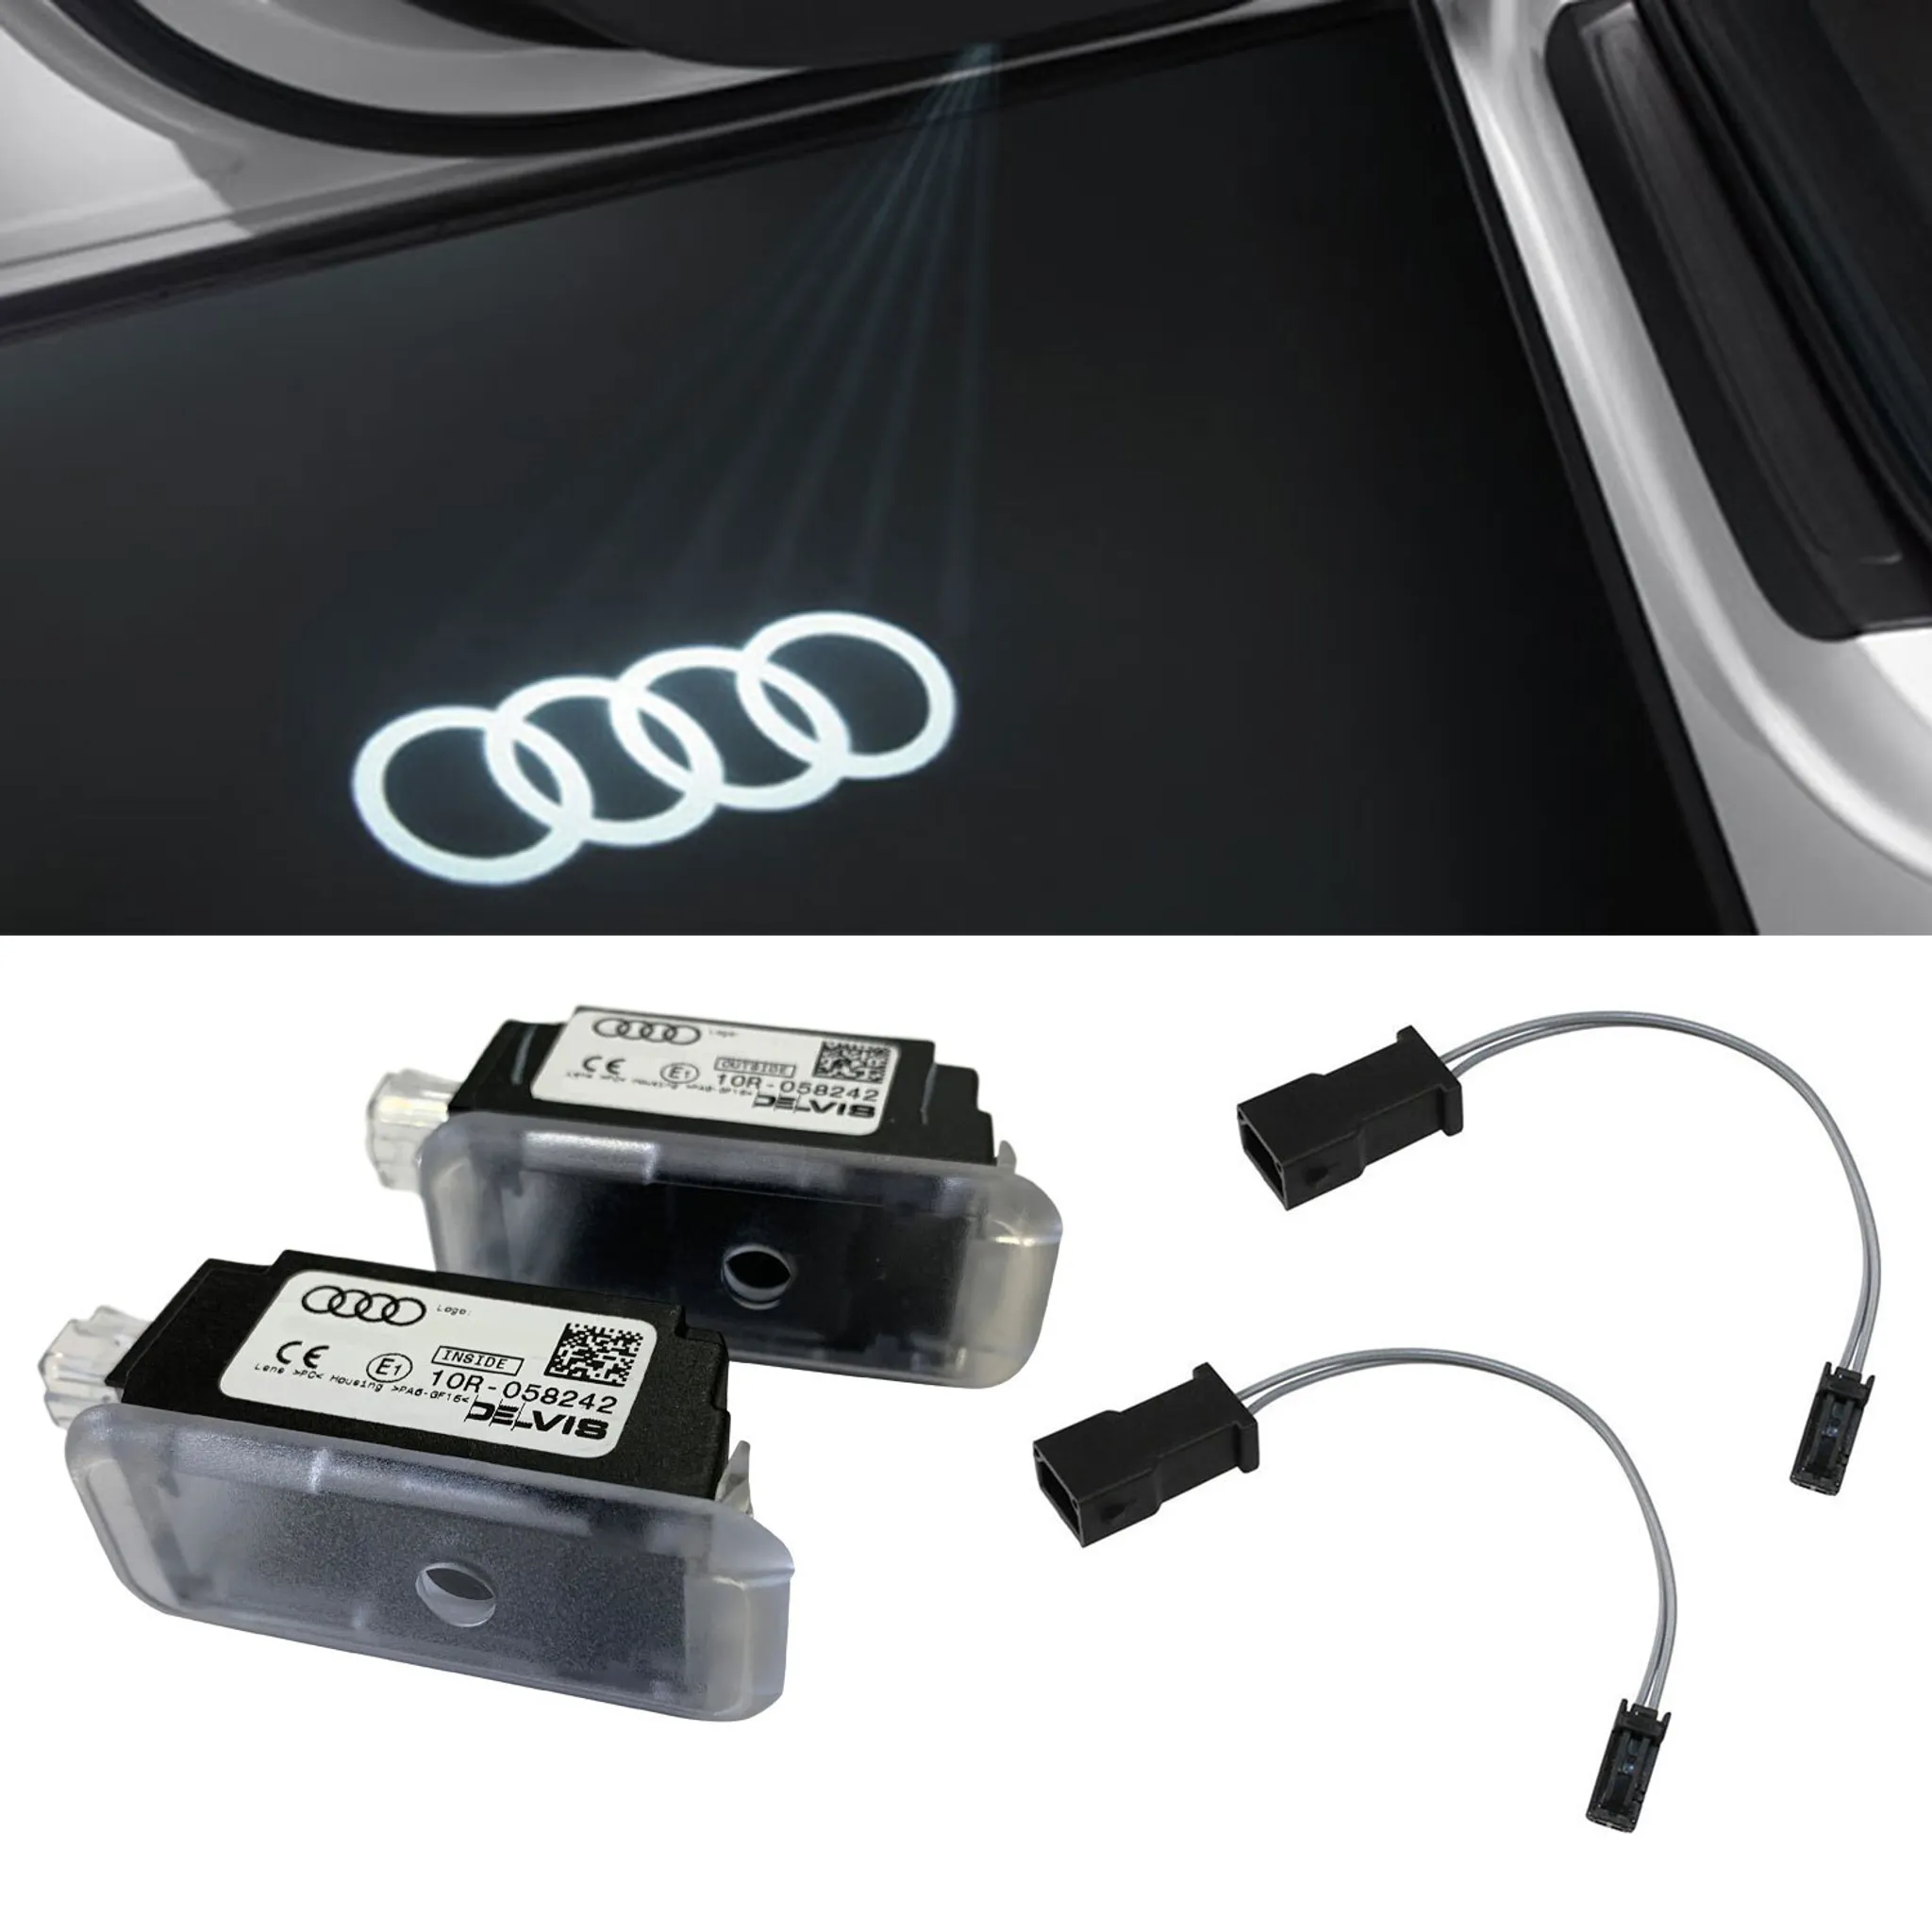 Audi Original LED Projektor rechts Audi Sport Einstiegsbeleuchtung  Türbeleuchtung